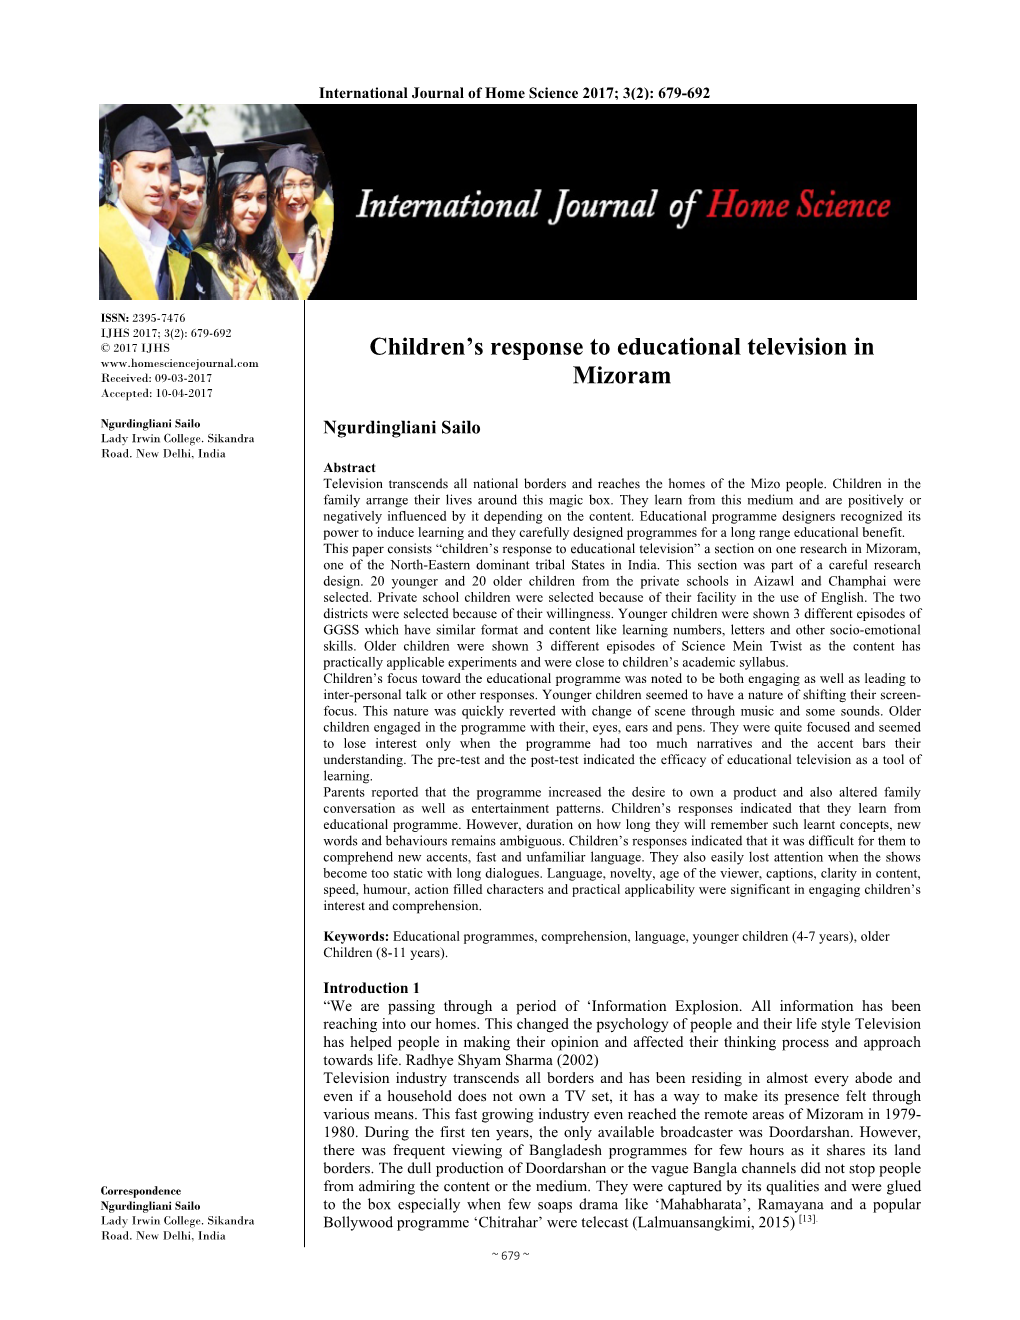 Children's Response to Educational Television in Mizoram